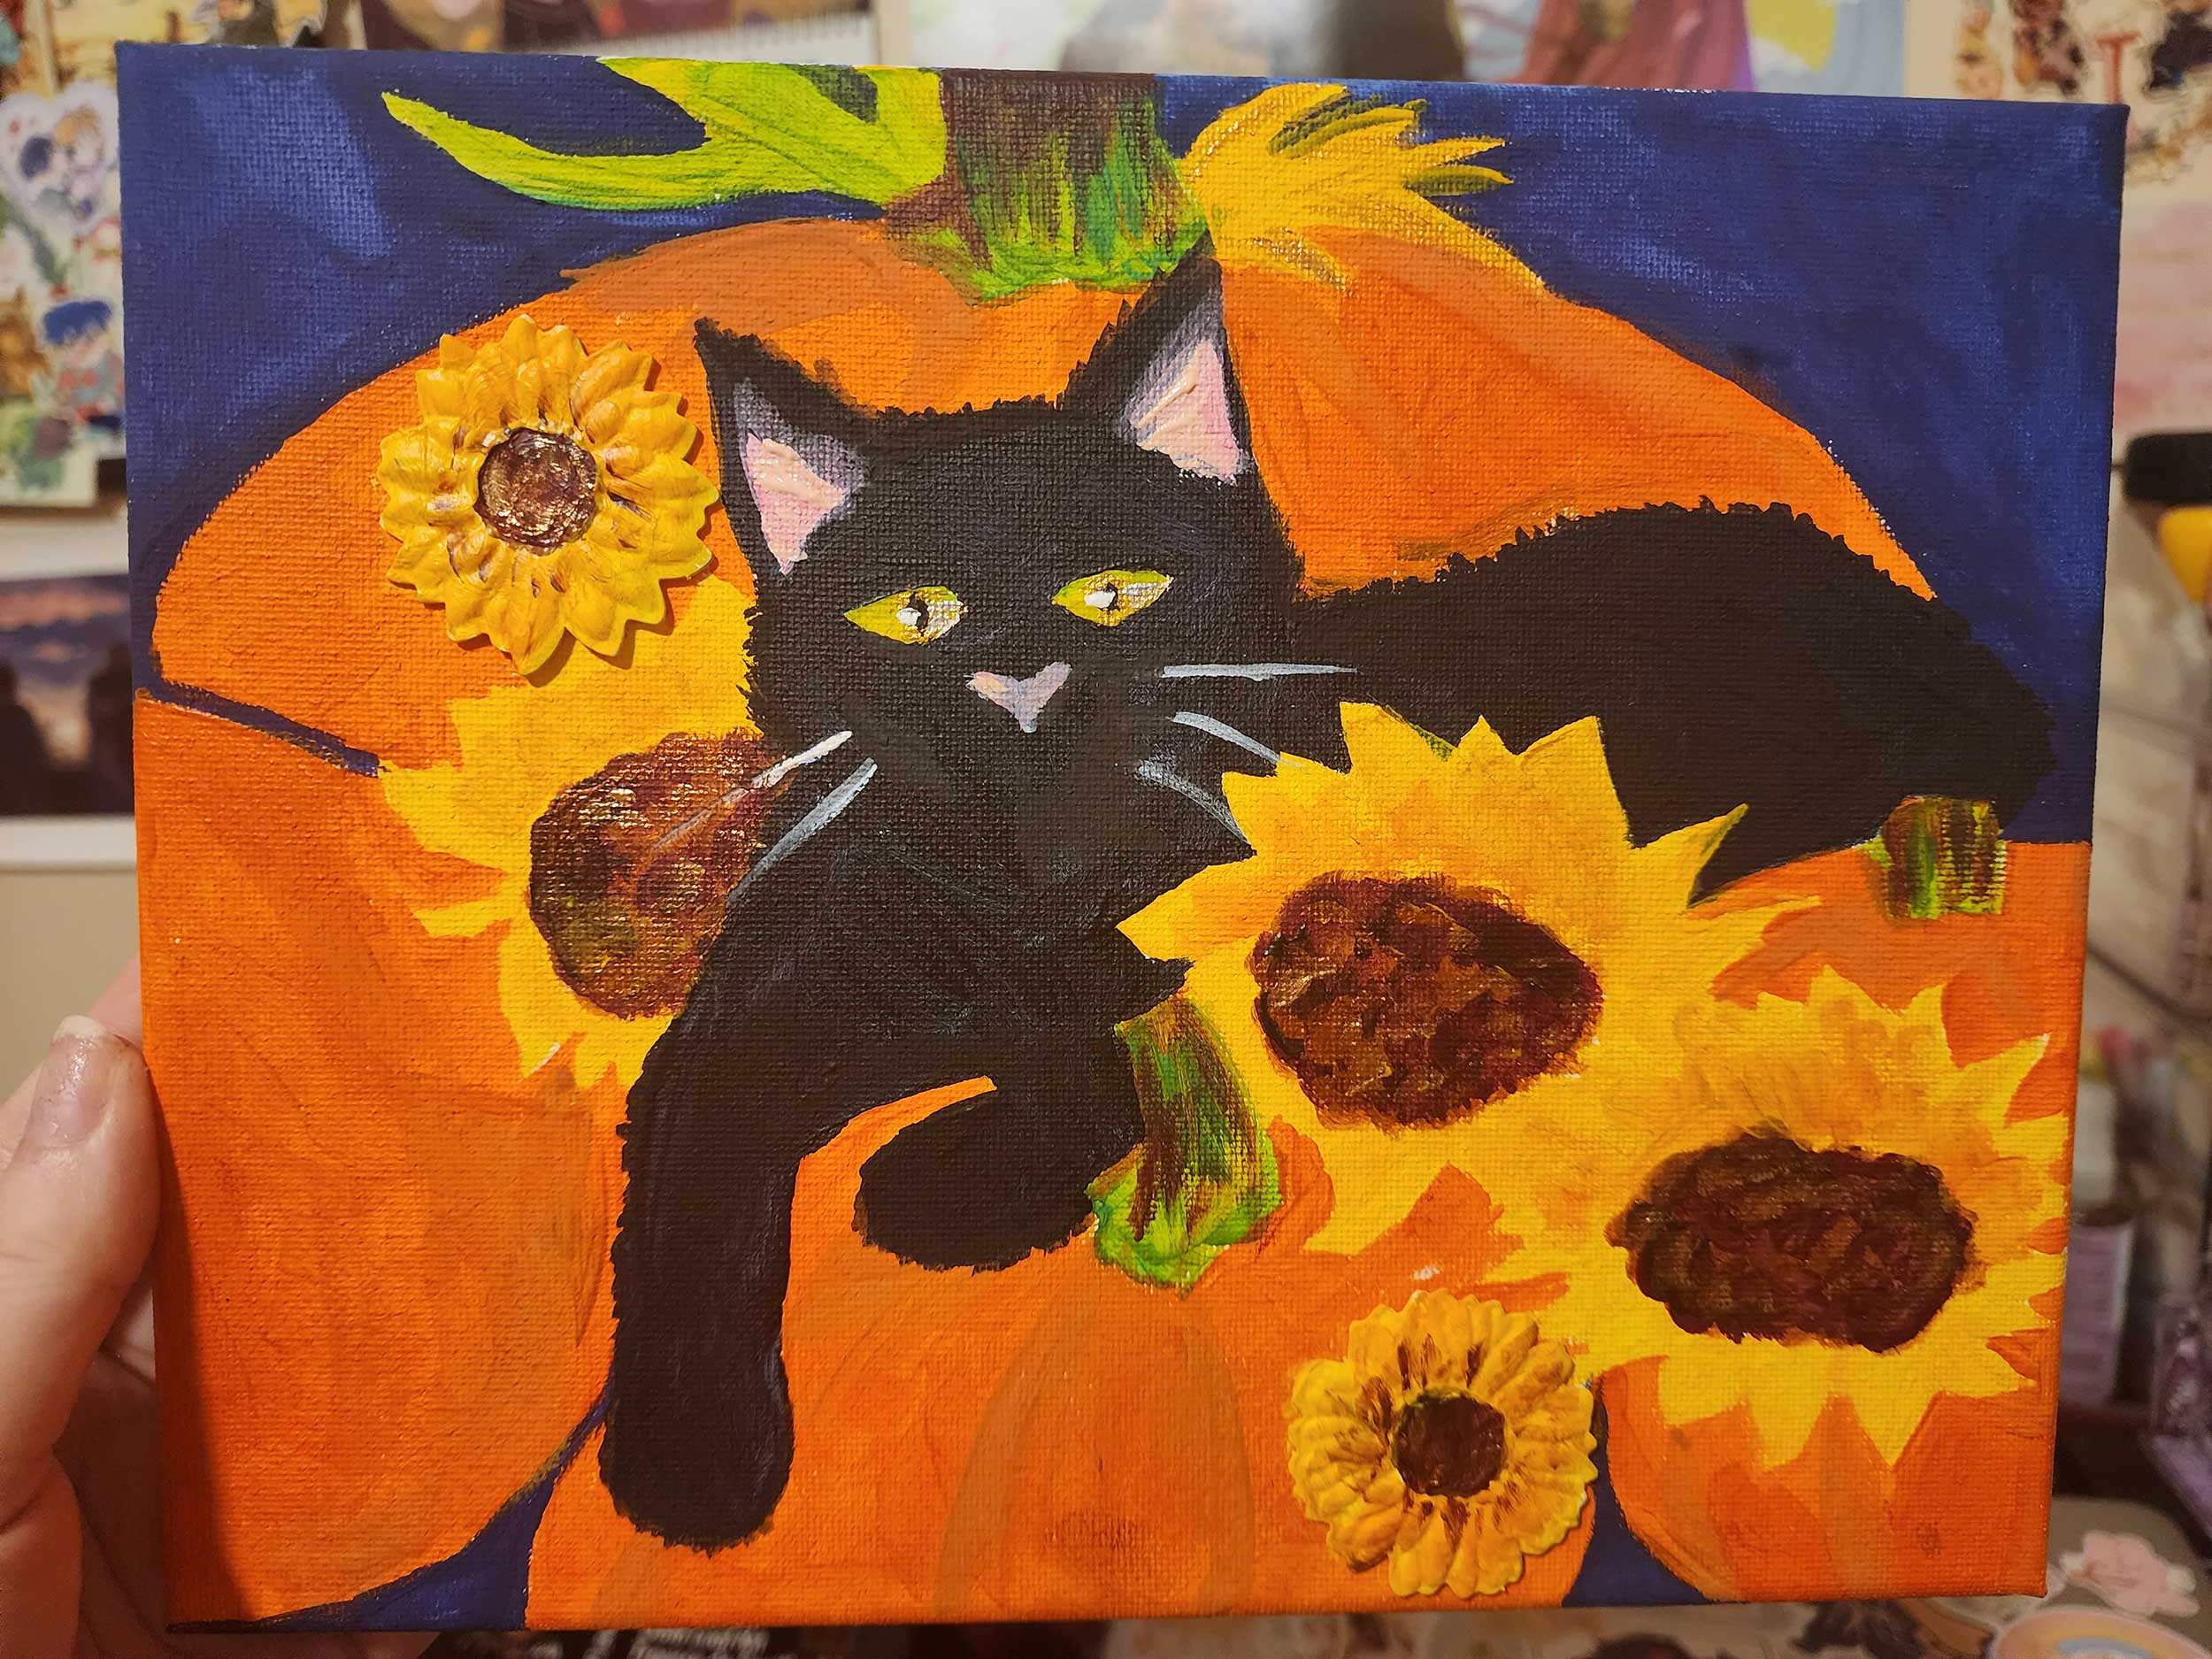 painting of black cat amid pumpkins